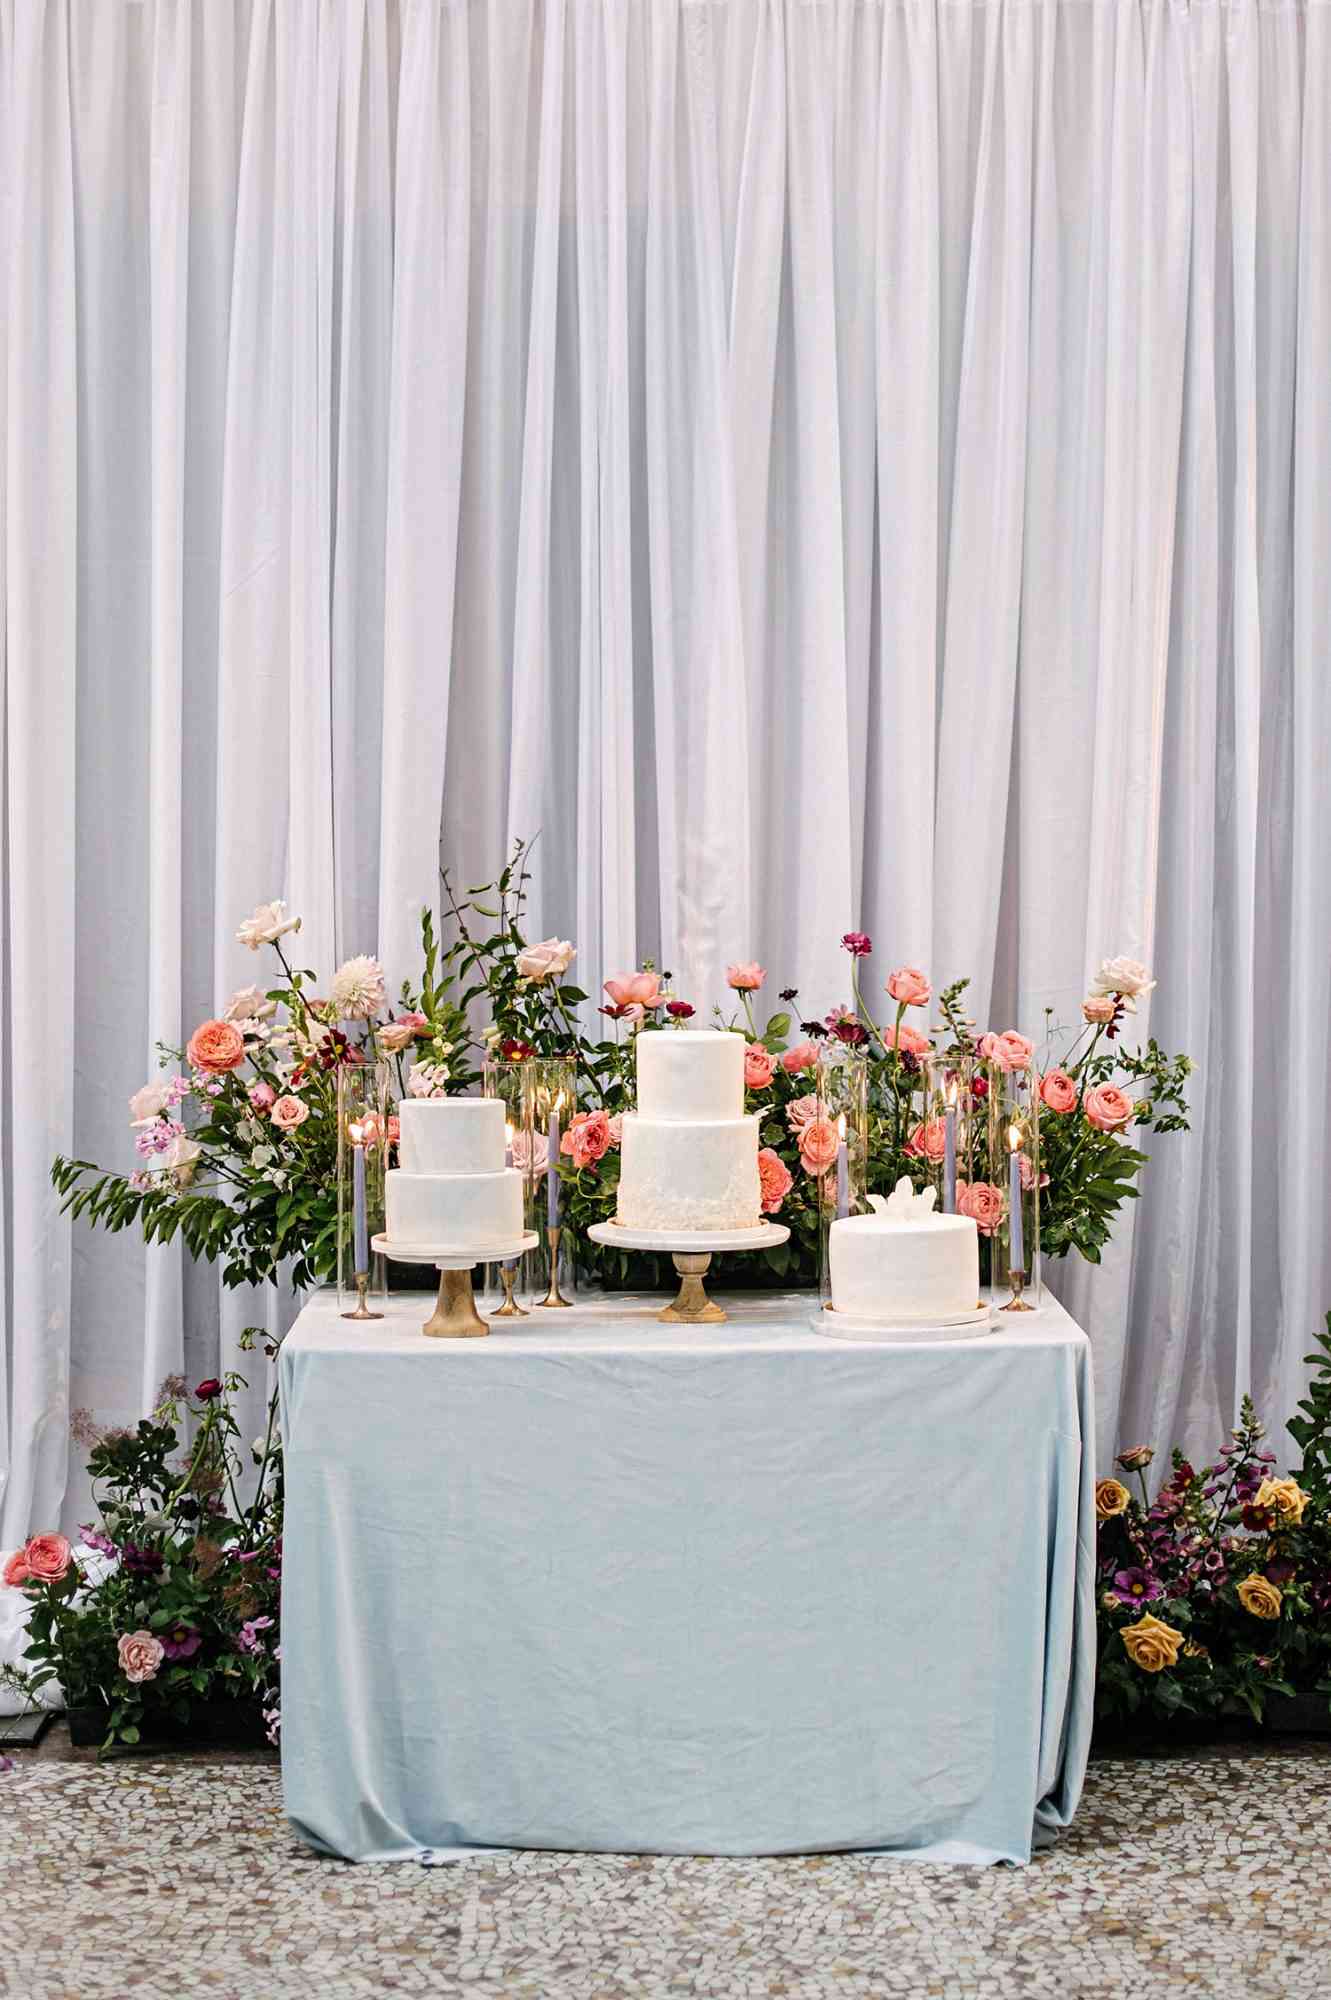 stephanie tim wedding cakes on table